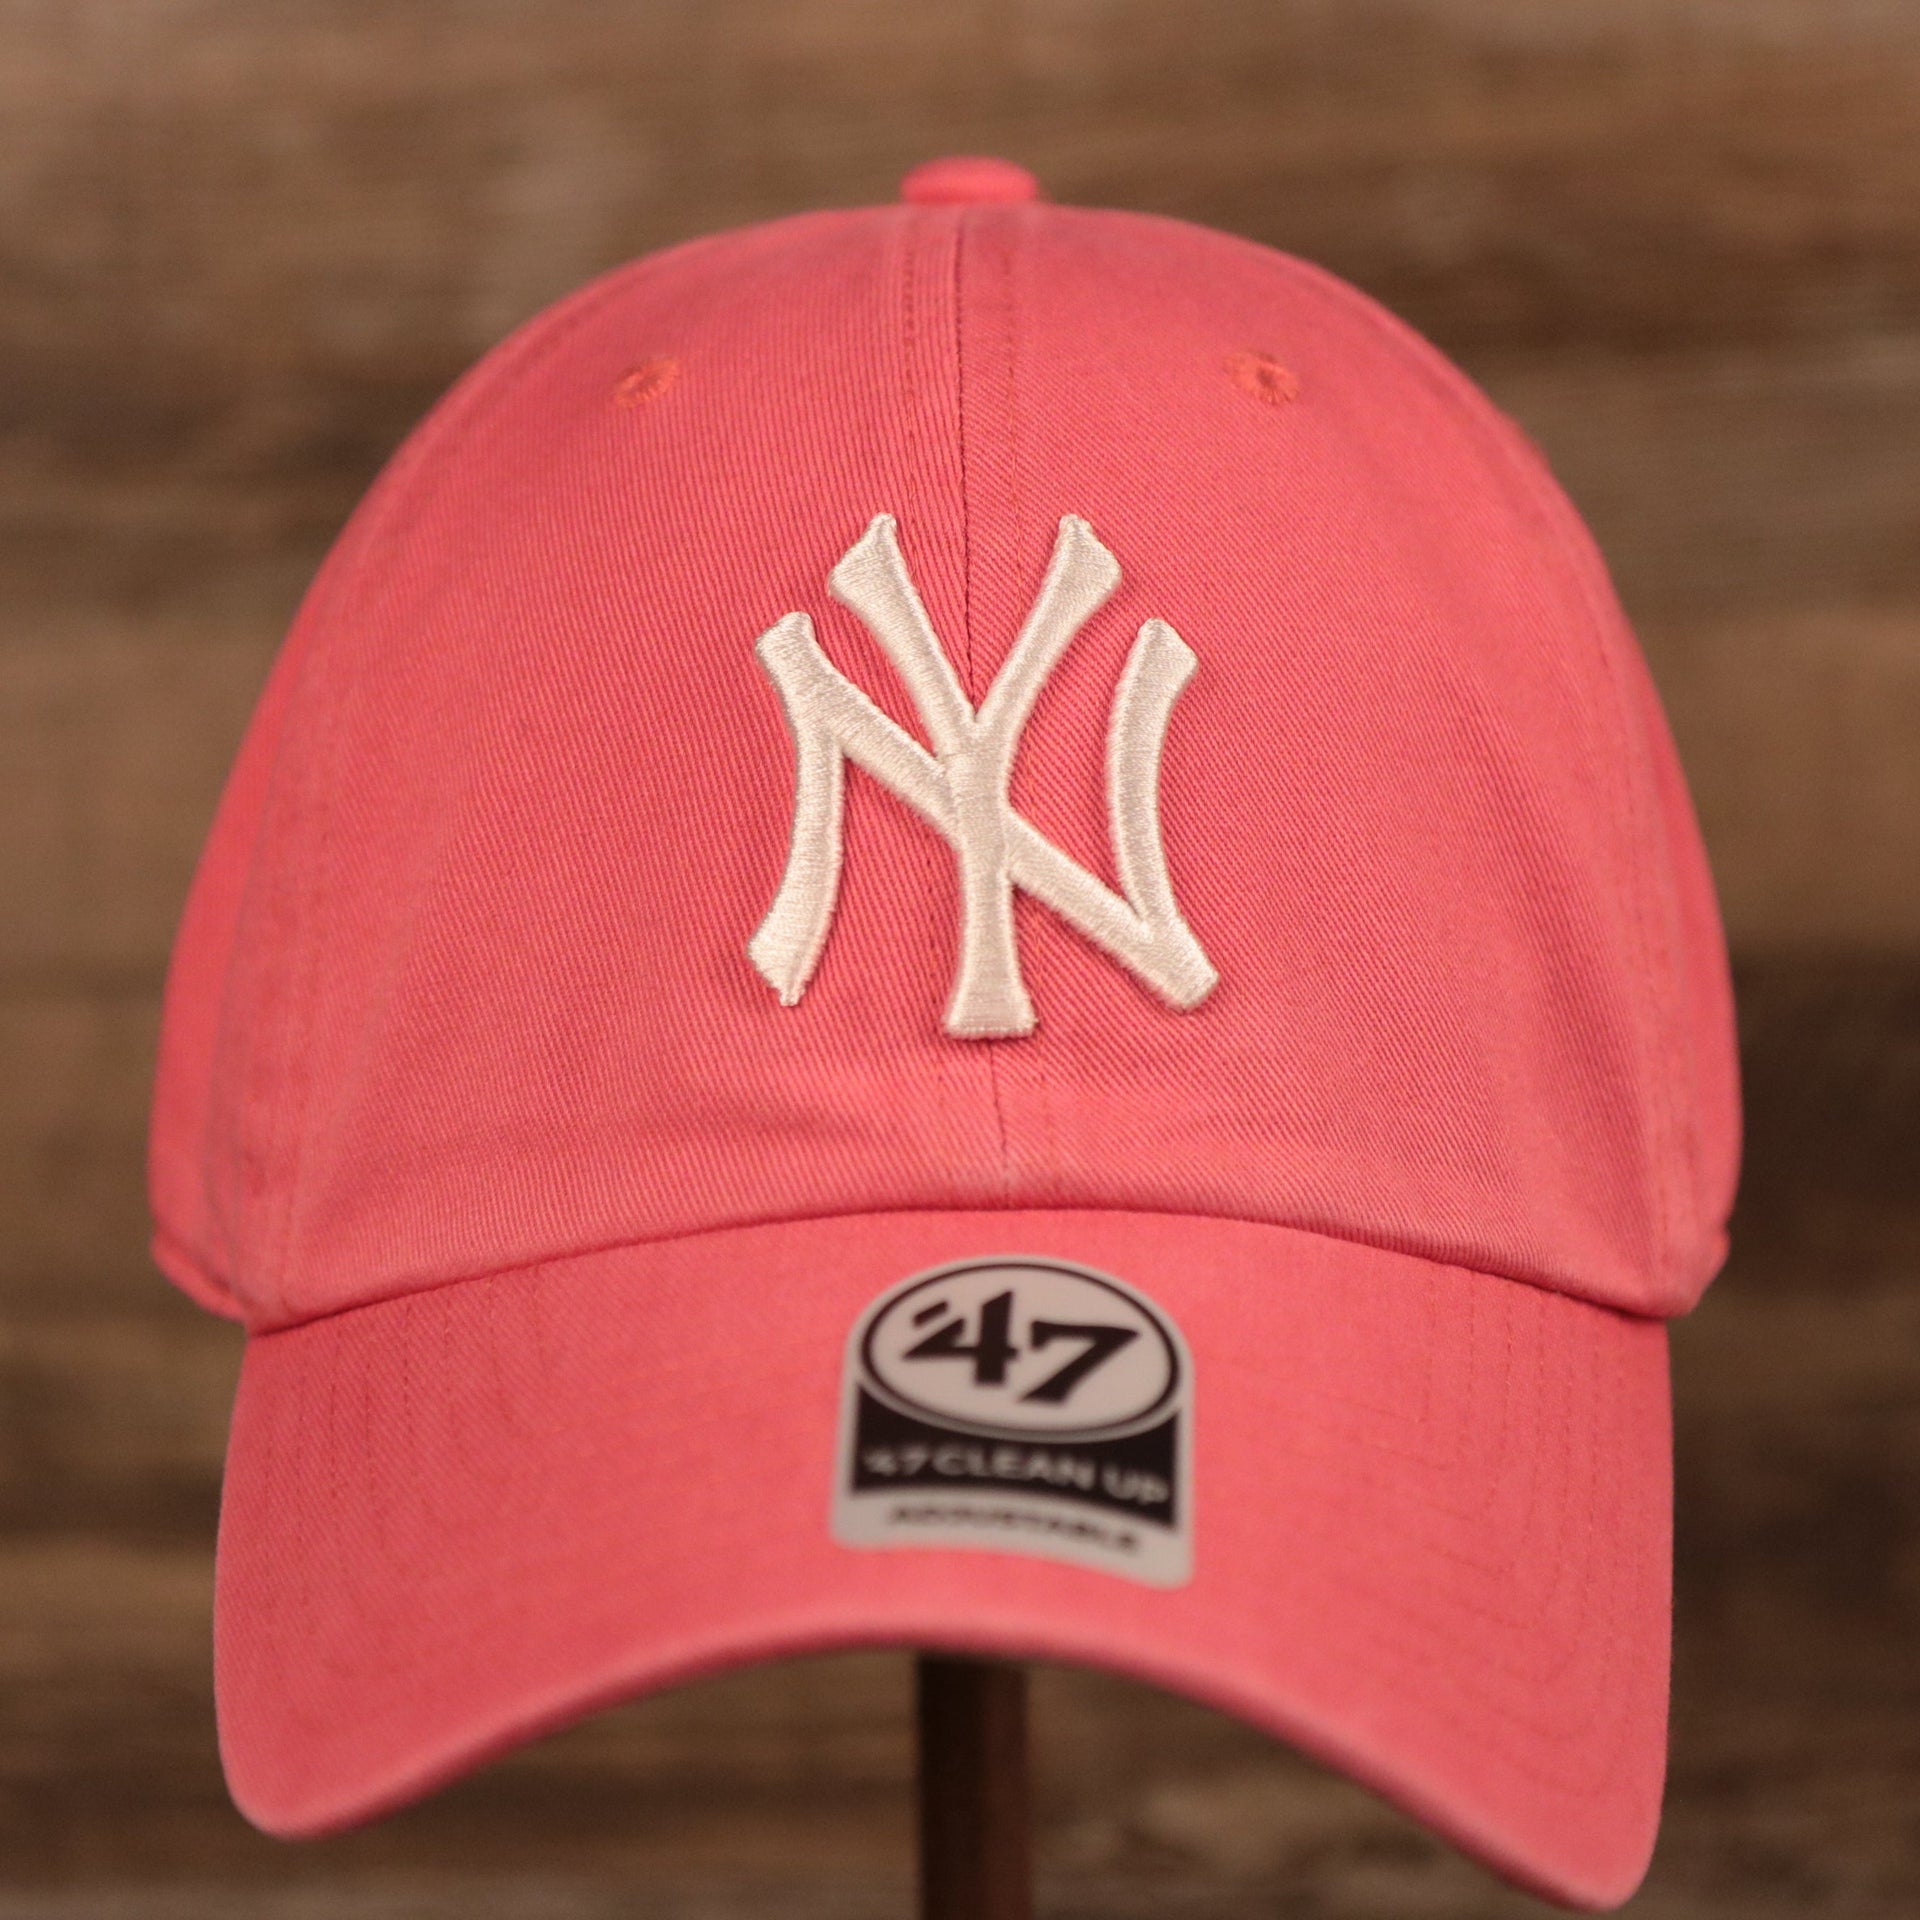 The pink adjustable New York Yankees green bottom baseball hat.